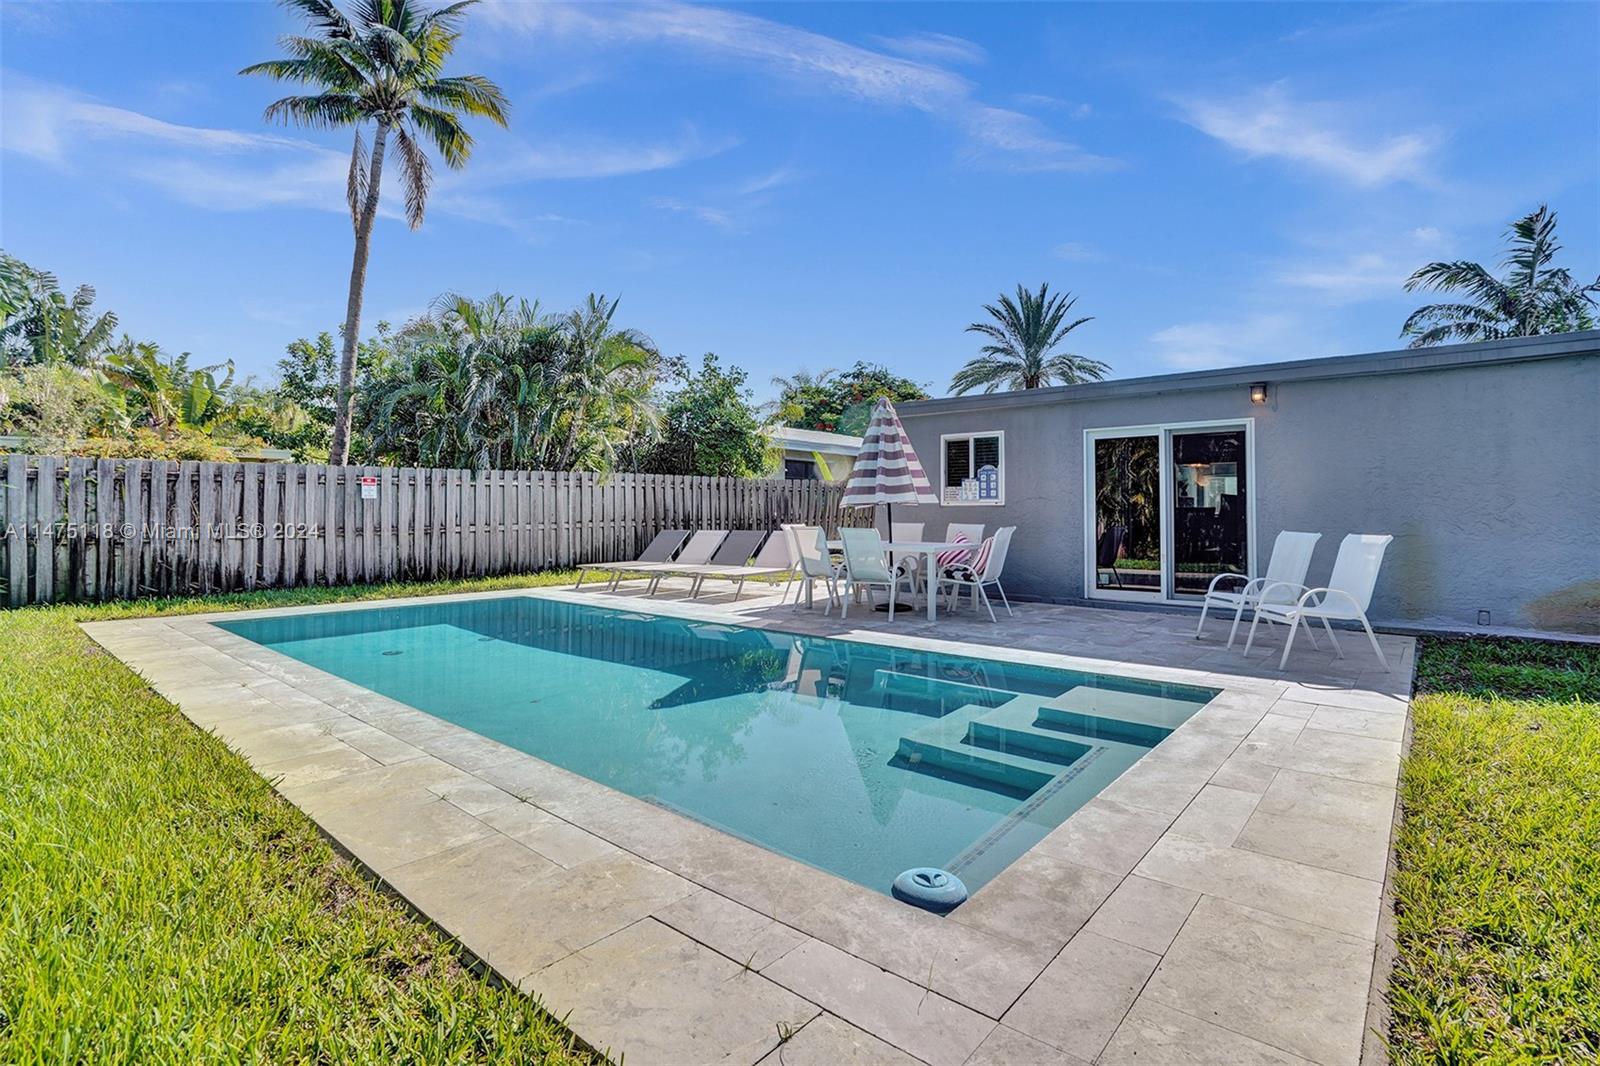 Rental Property at 1117 Ne 16th Ter, Fort Lauderdale, Broward County, Florida -  - $799,999 MO.